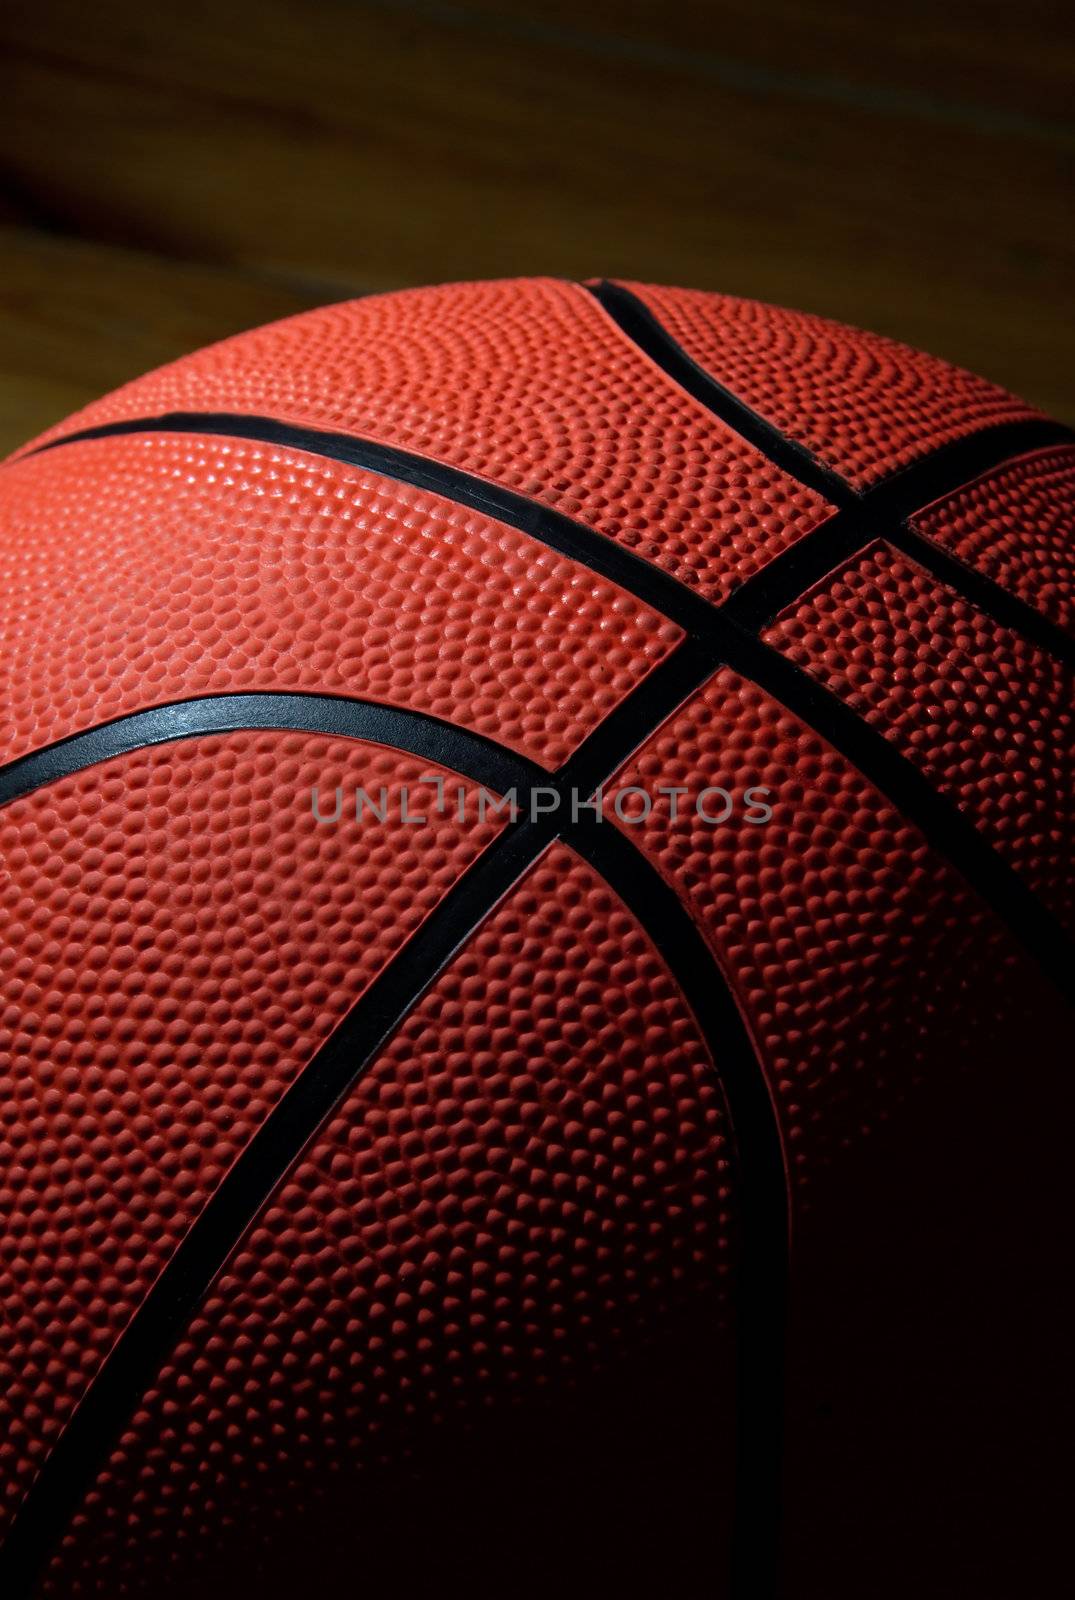 The ball to the basketball